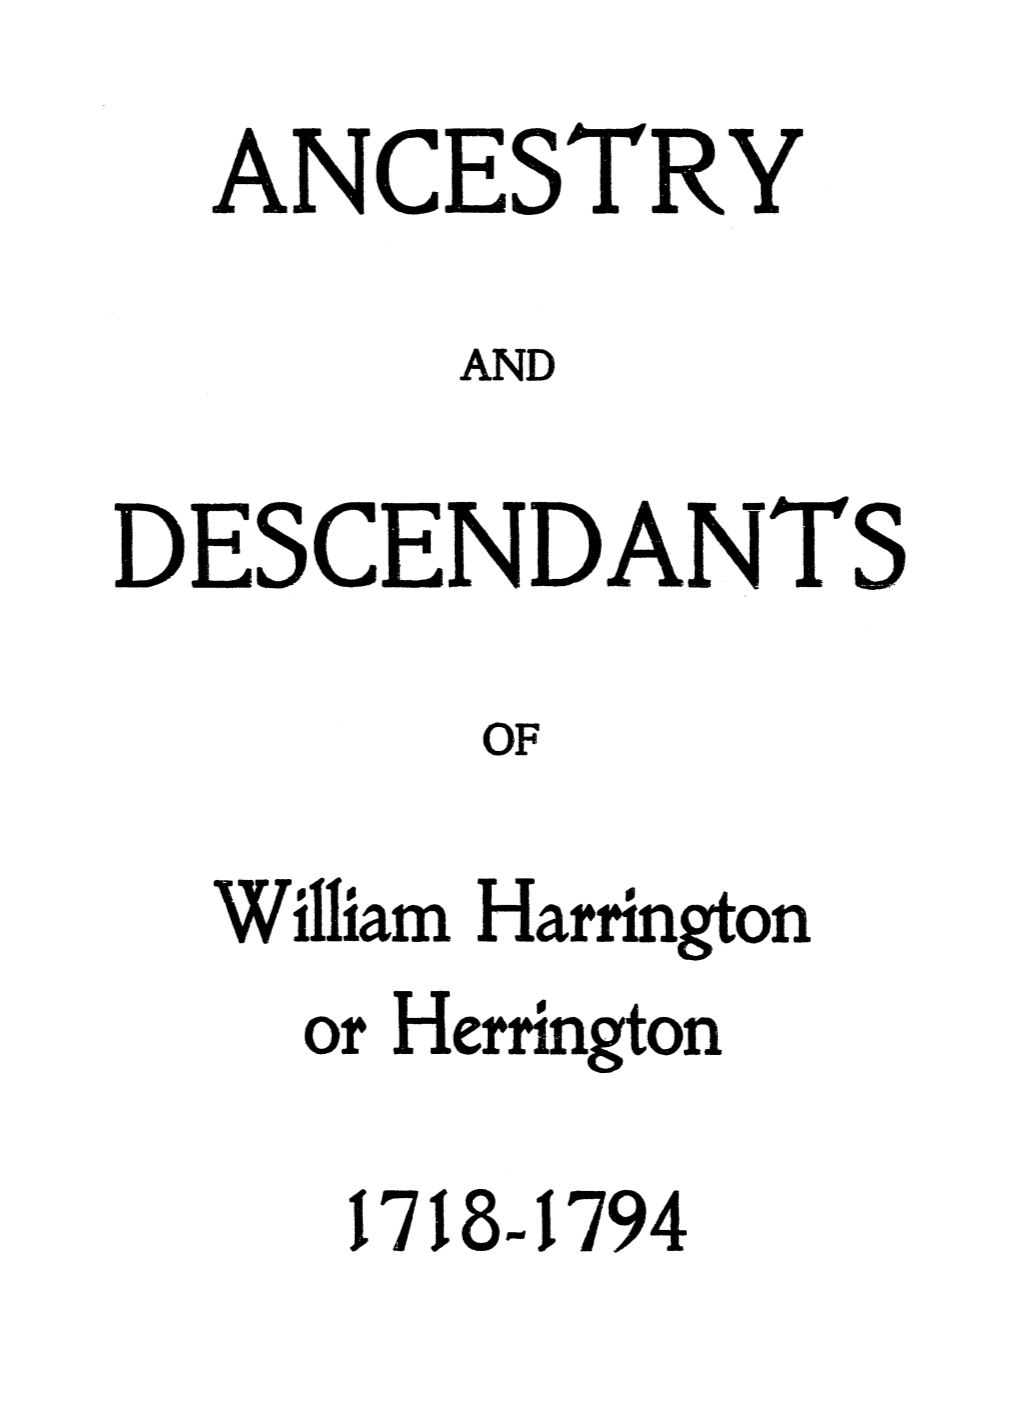 William Harrington Or Herrington